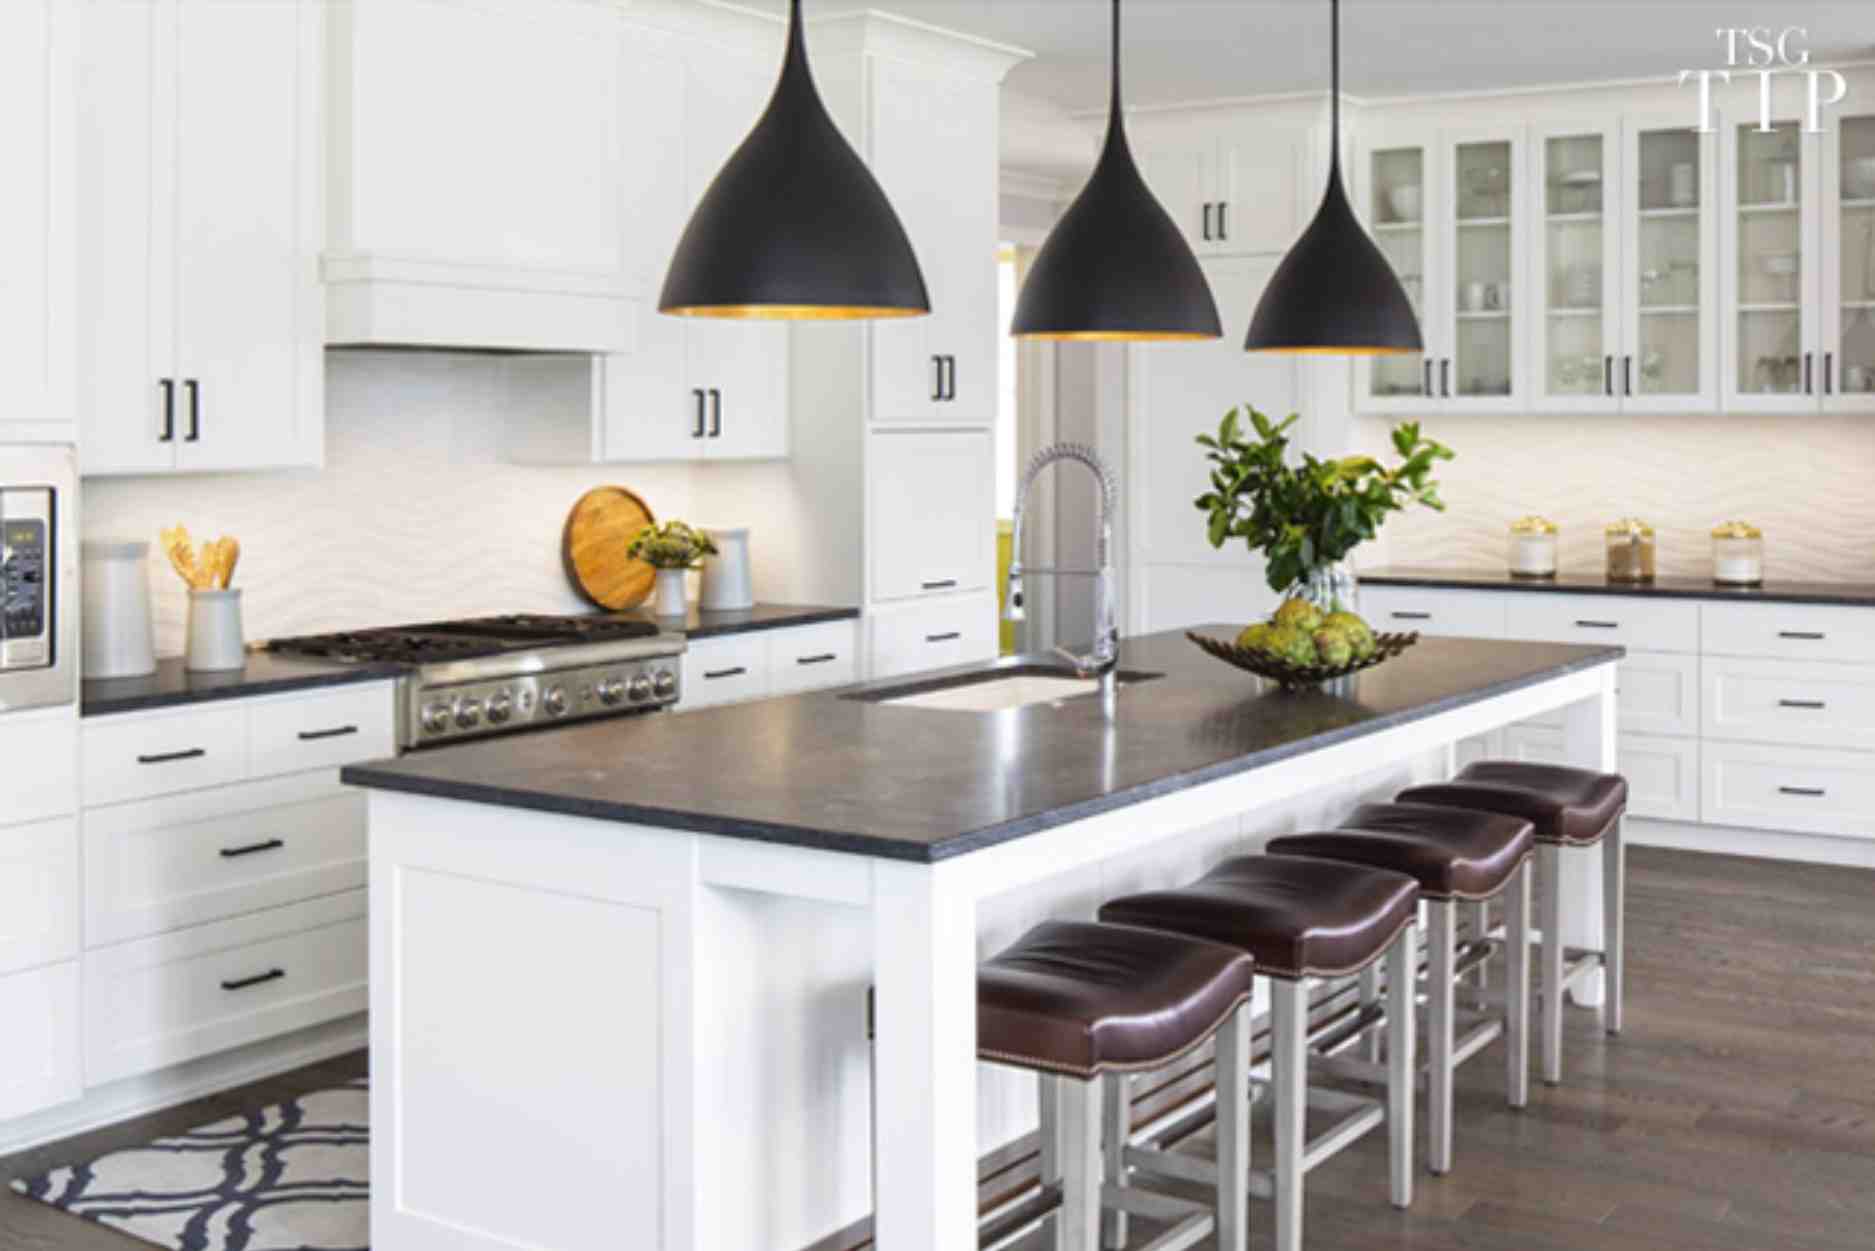 kitchen islands require task lighting for efficient cooking